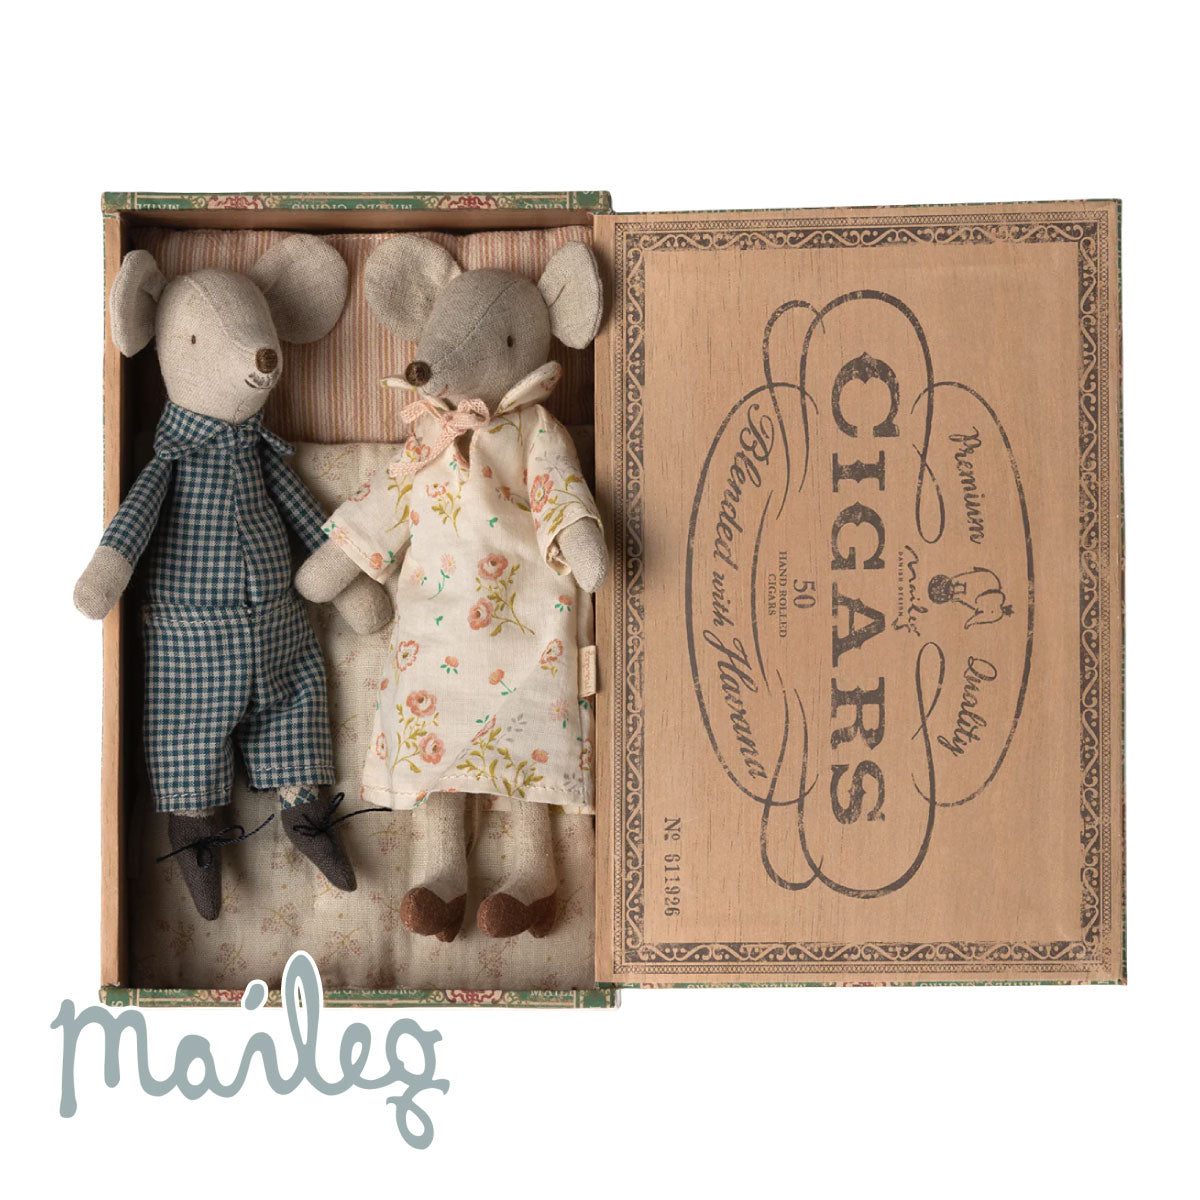 Maileg Grandma & Grandpa Mice in Cigar Box